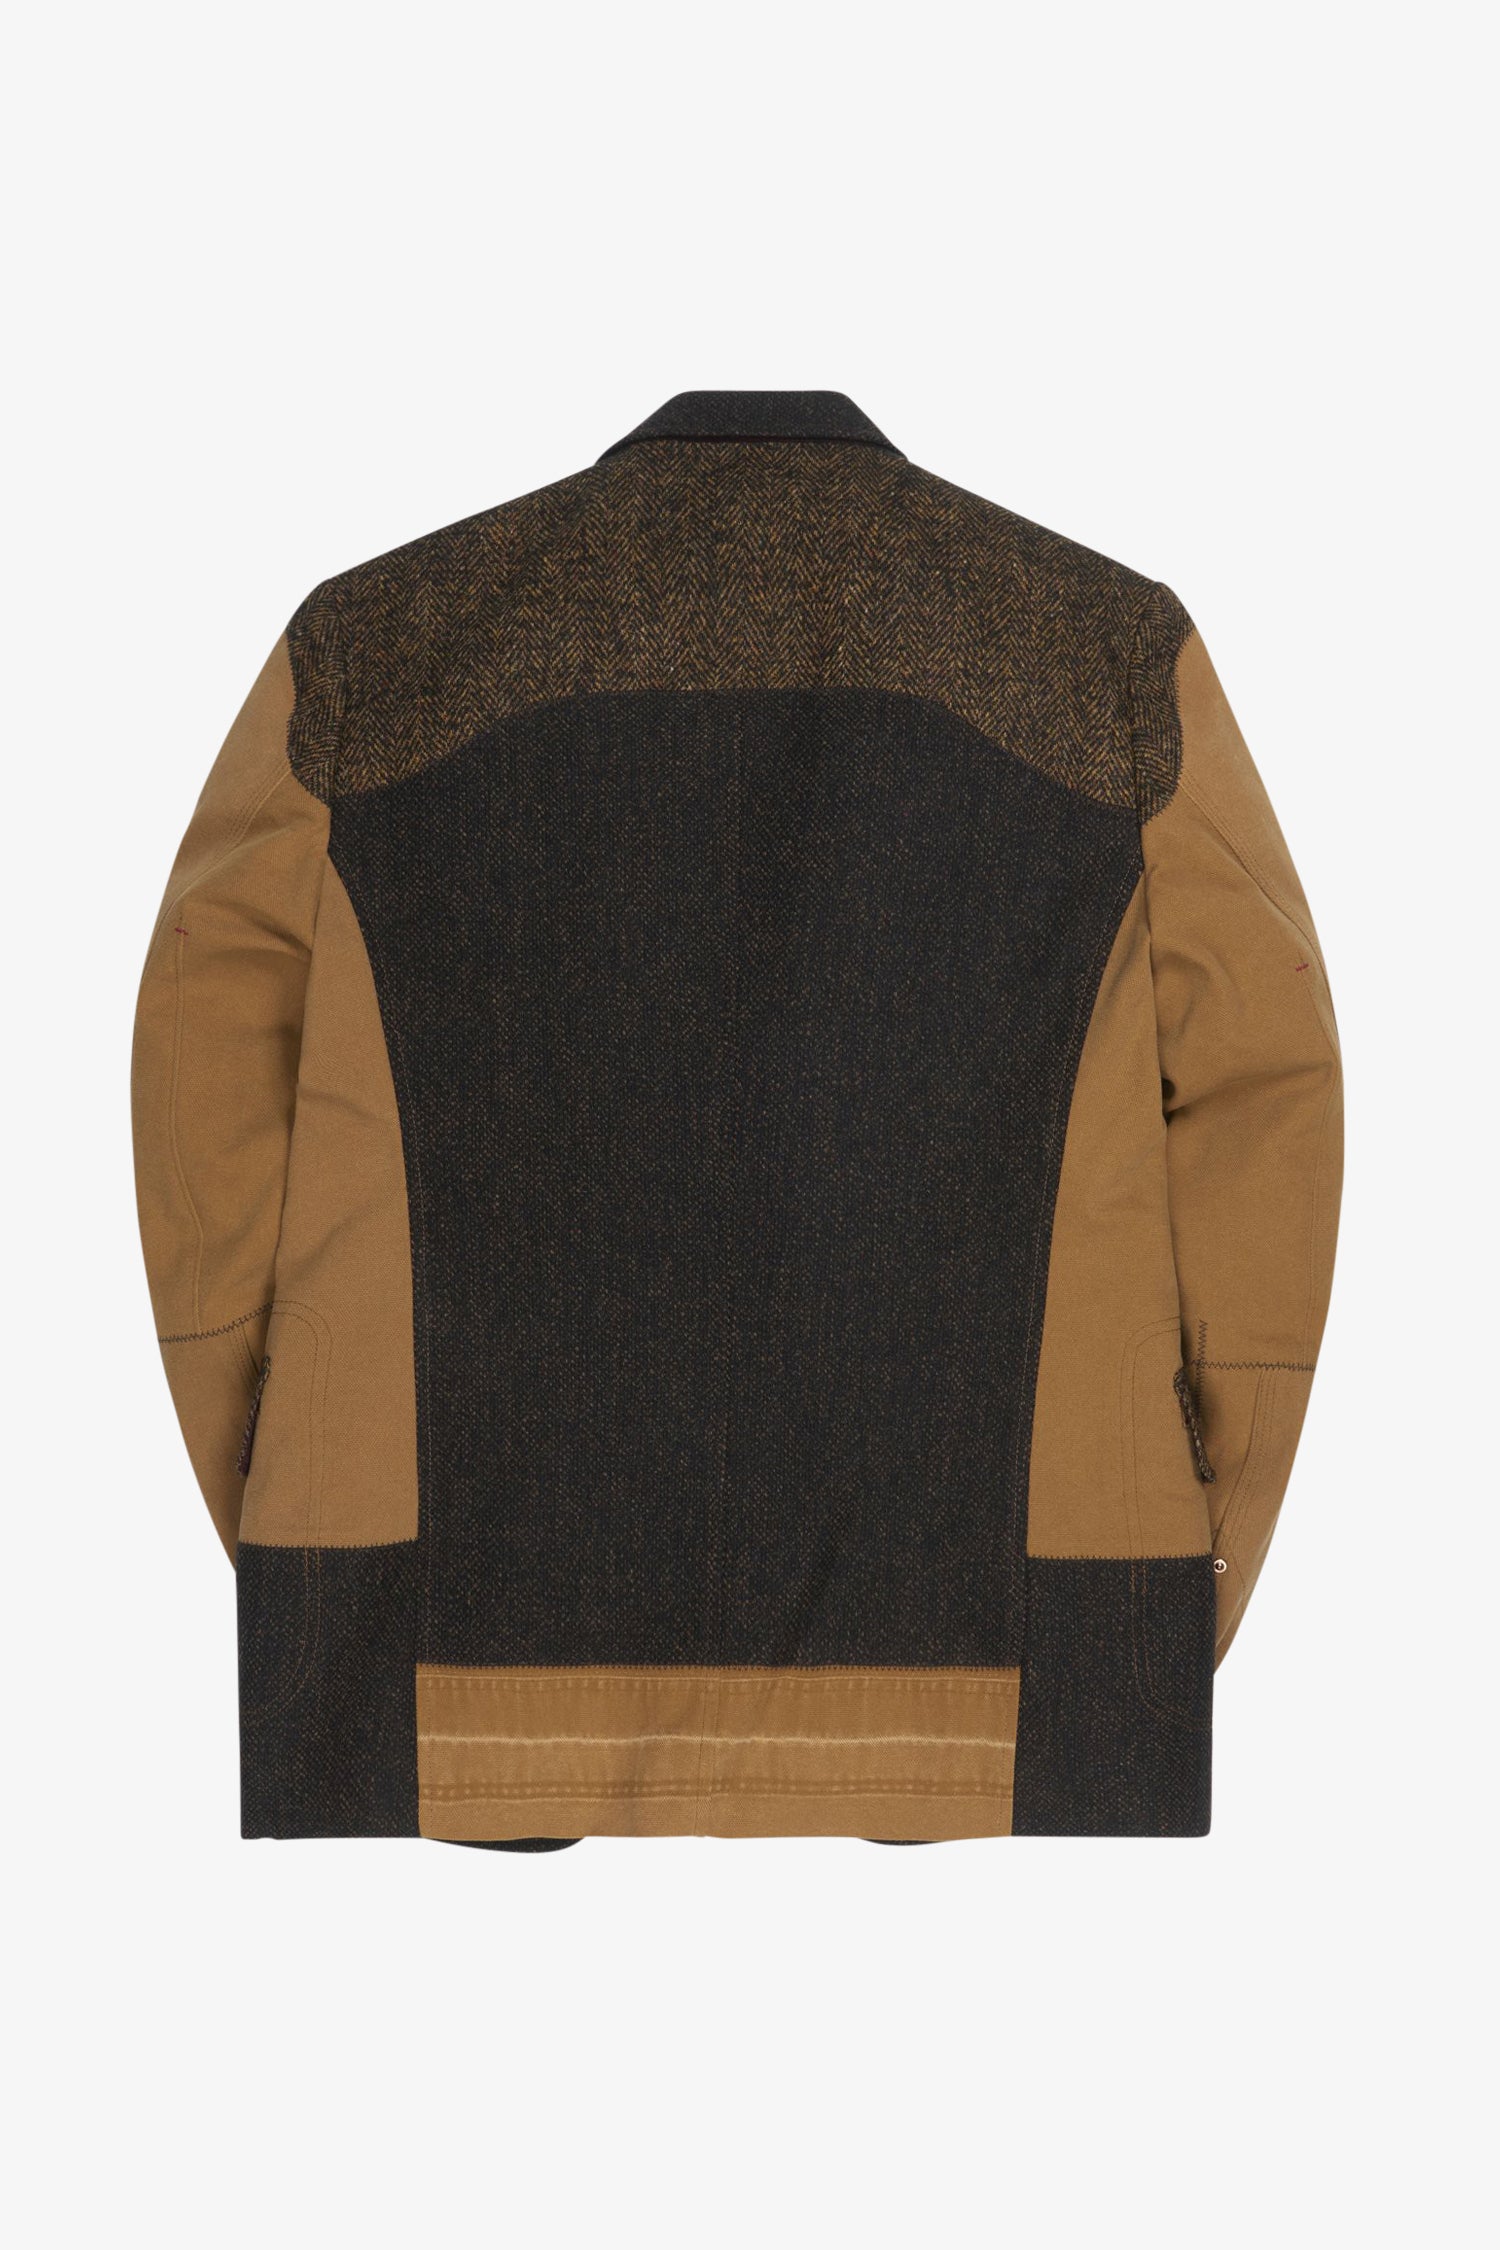 Selectshop FRAME - JUNYA WATANABE MAN Carhartt Tweed Blazer Outerwear Dubai